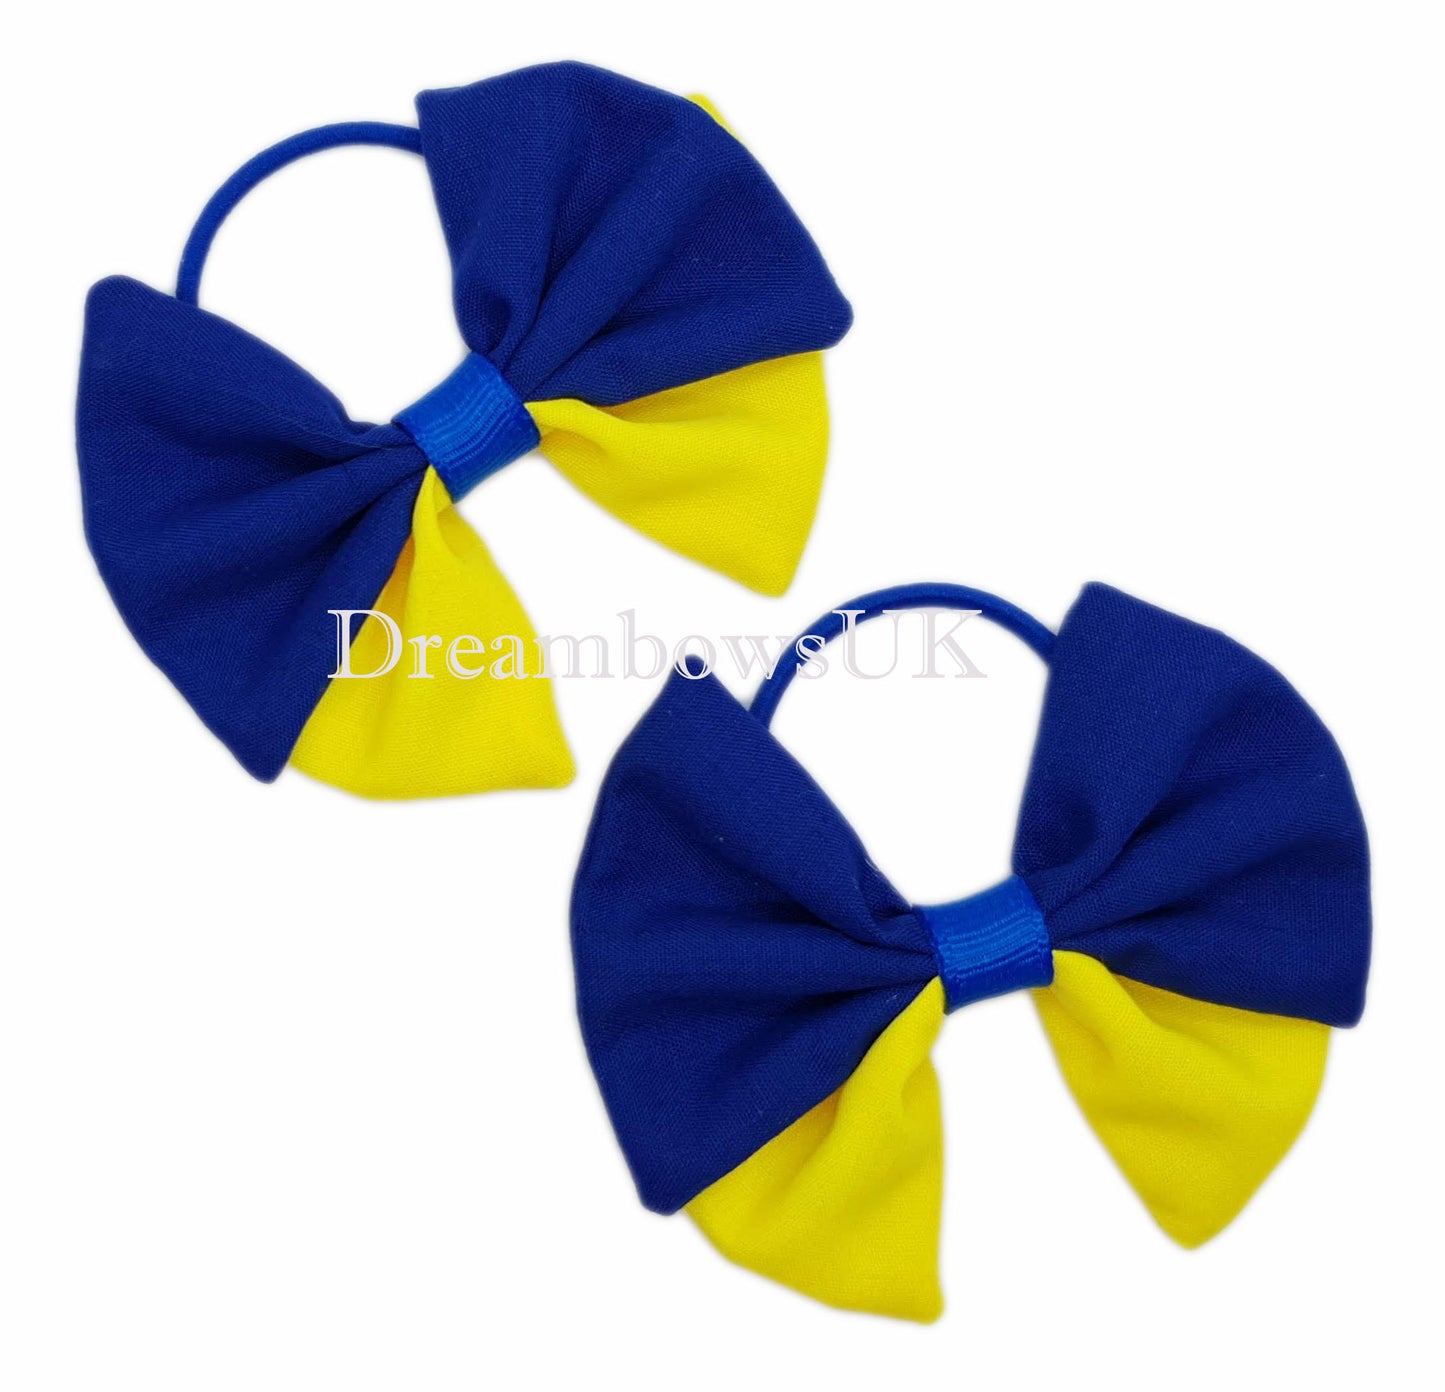 2x Royal blue and yellow fabric hair bows